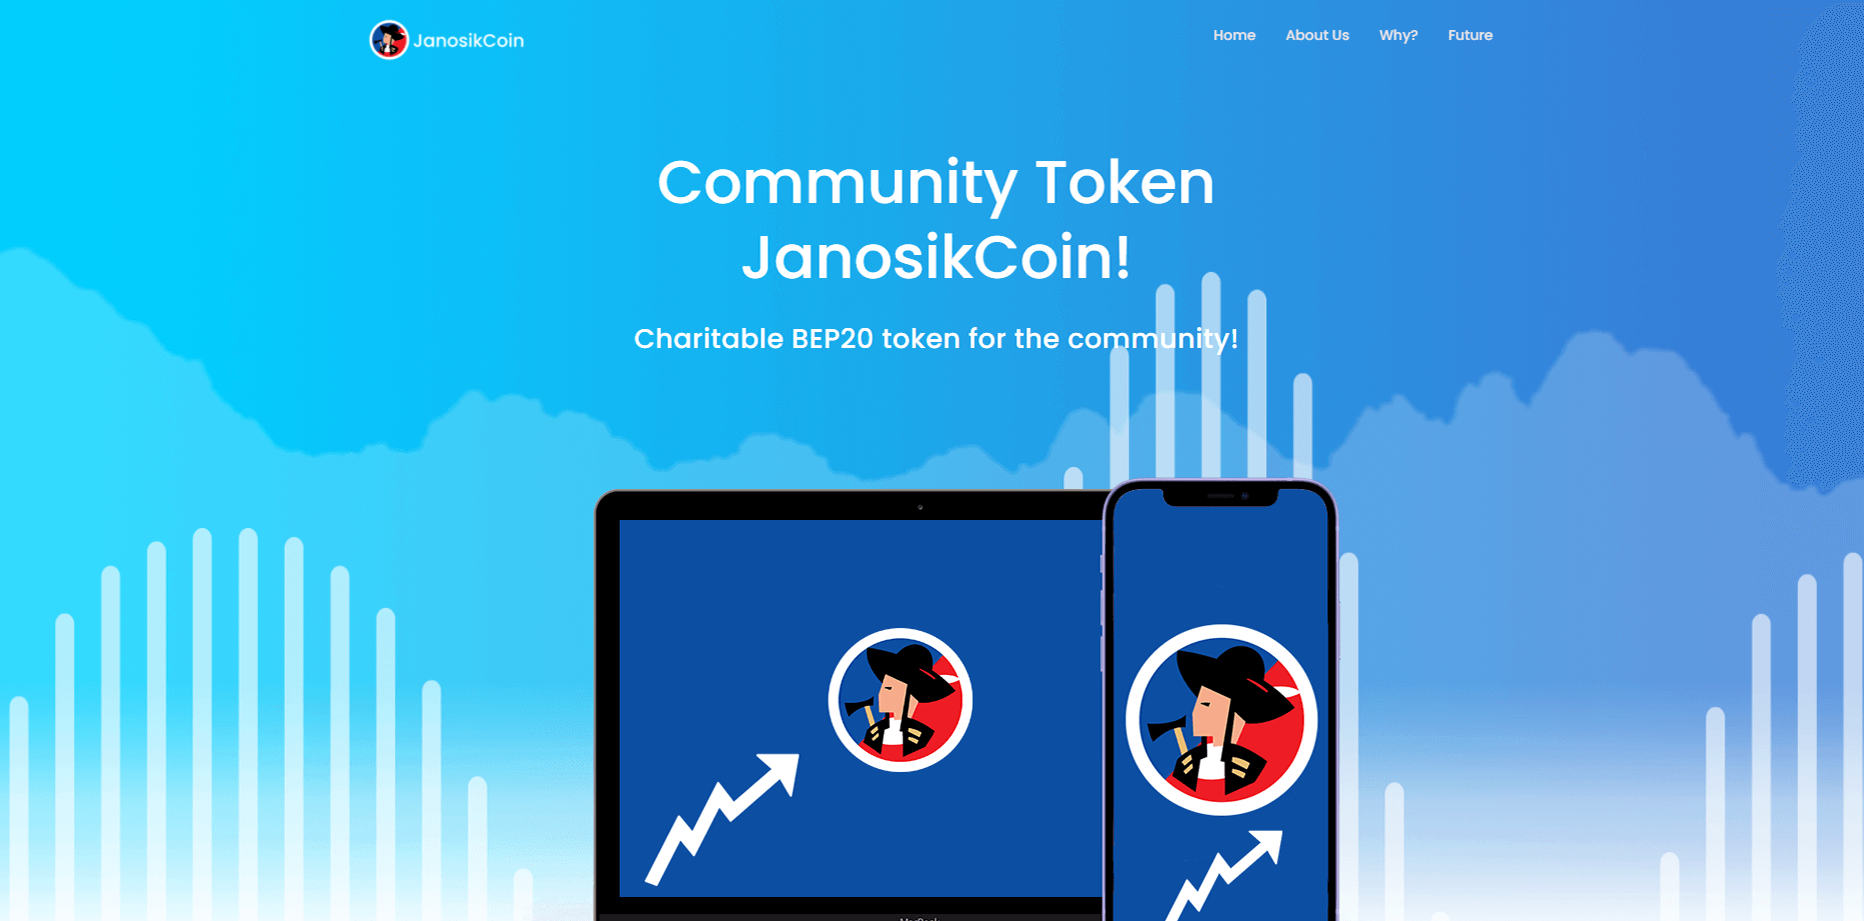 Janosikcoin.com